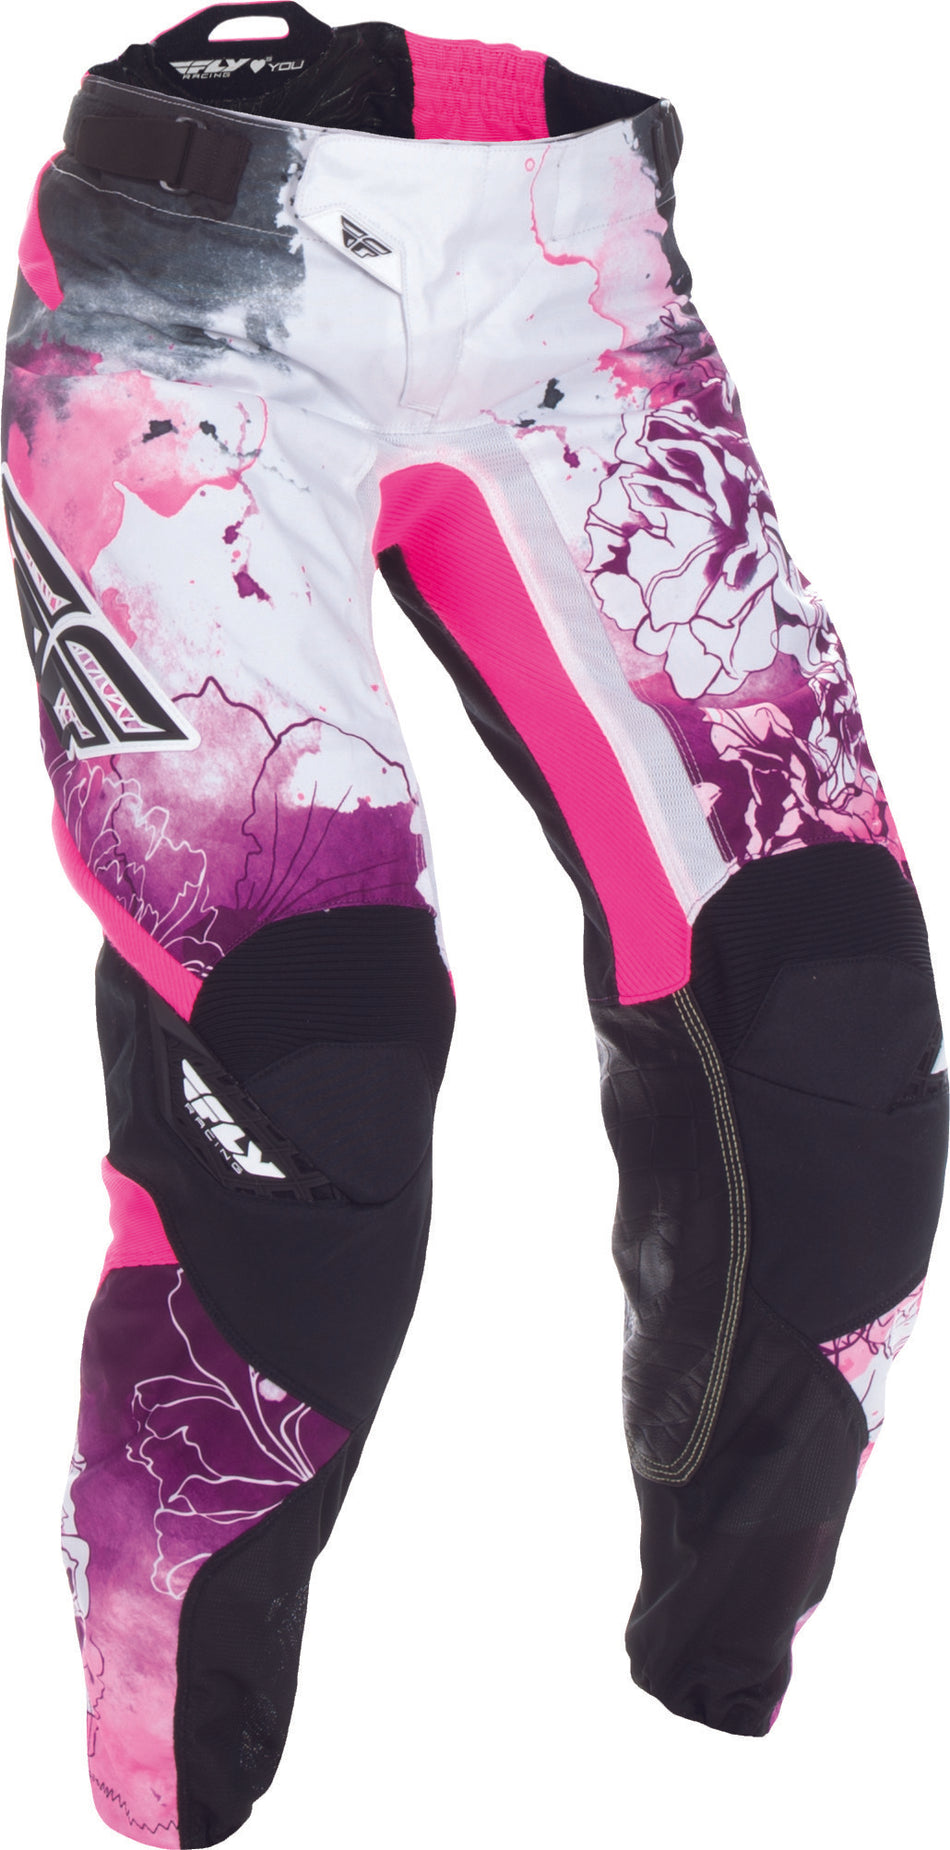 FLY RACING Kinetic Women's Race Pant Pink/Purple Sz 5/6 370-63206